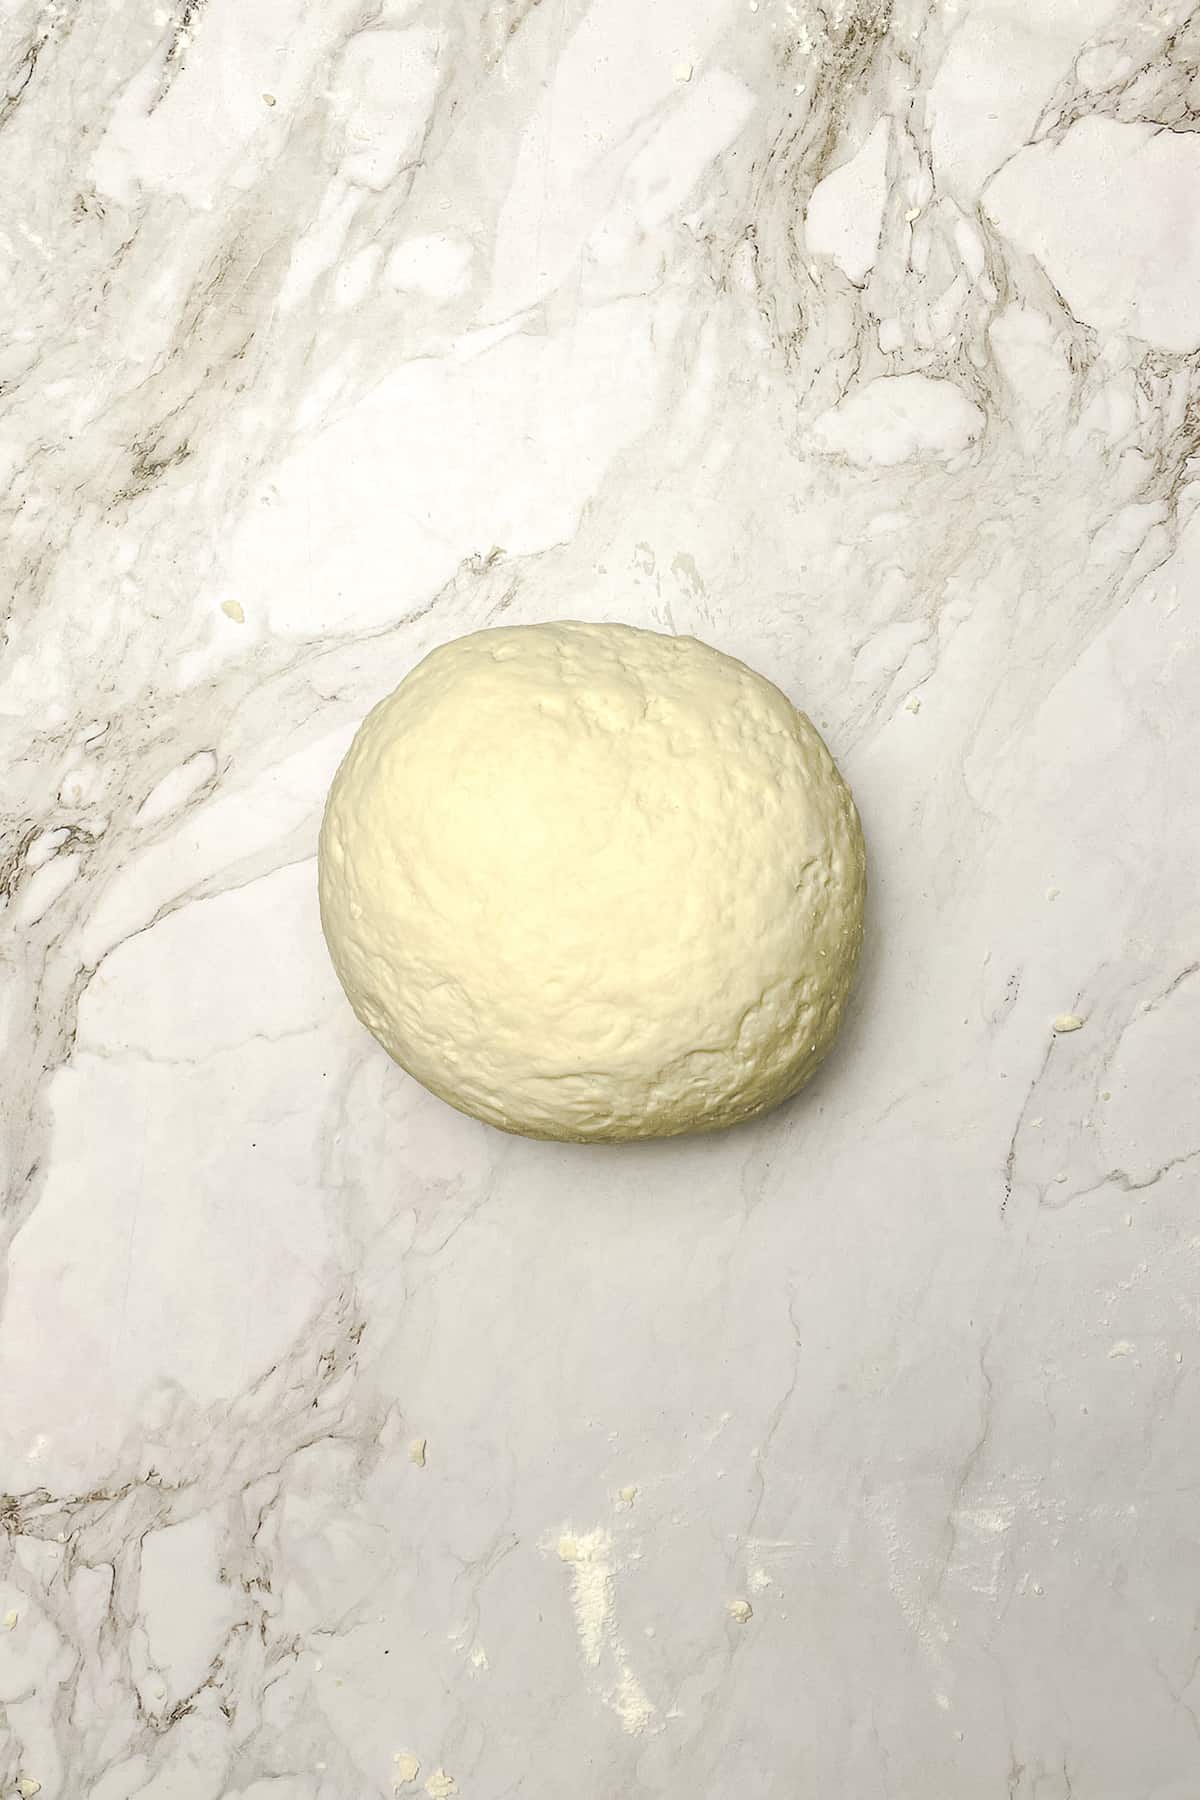 ball of ricotta gnocchi dough